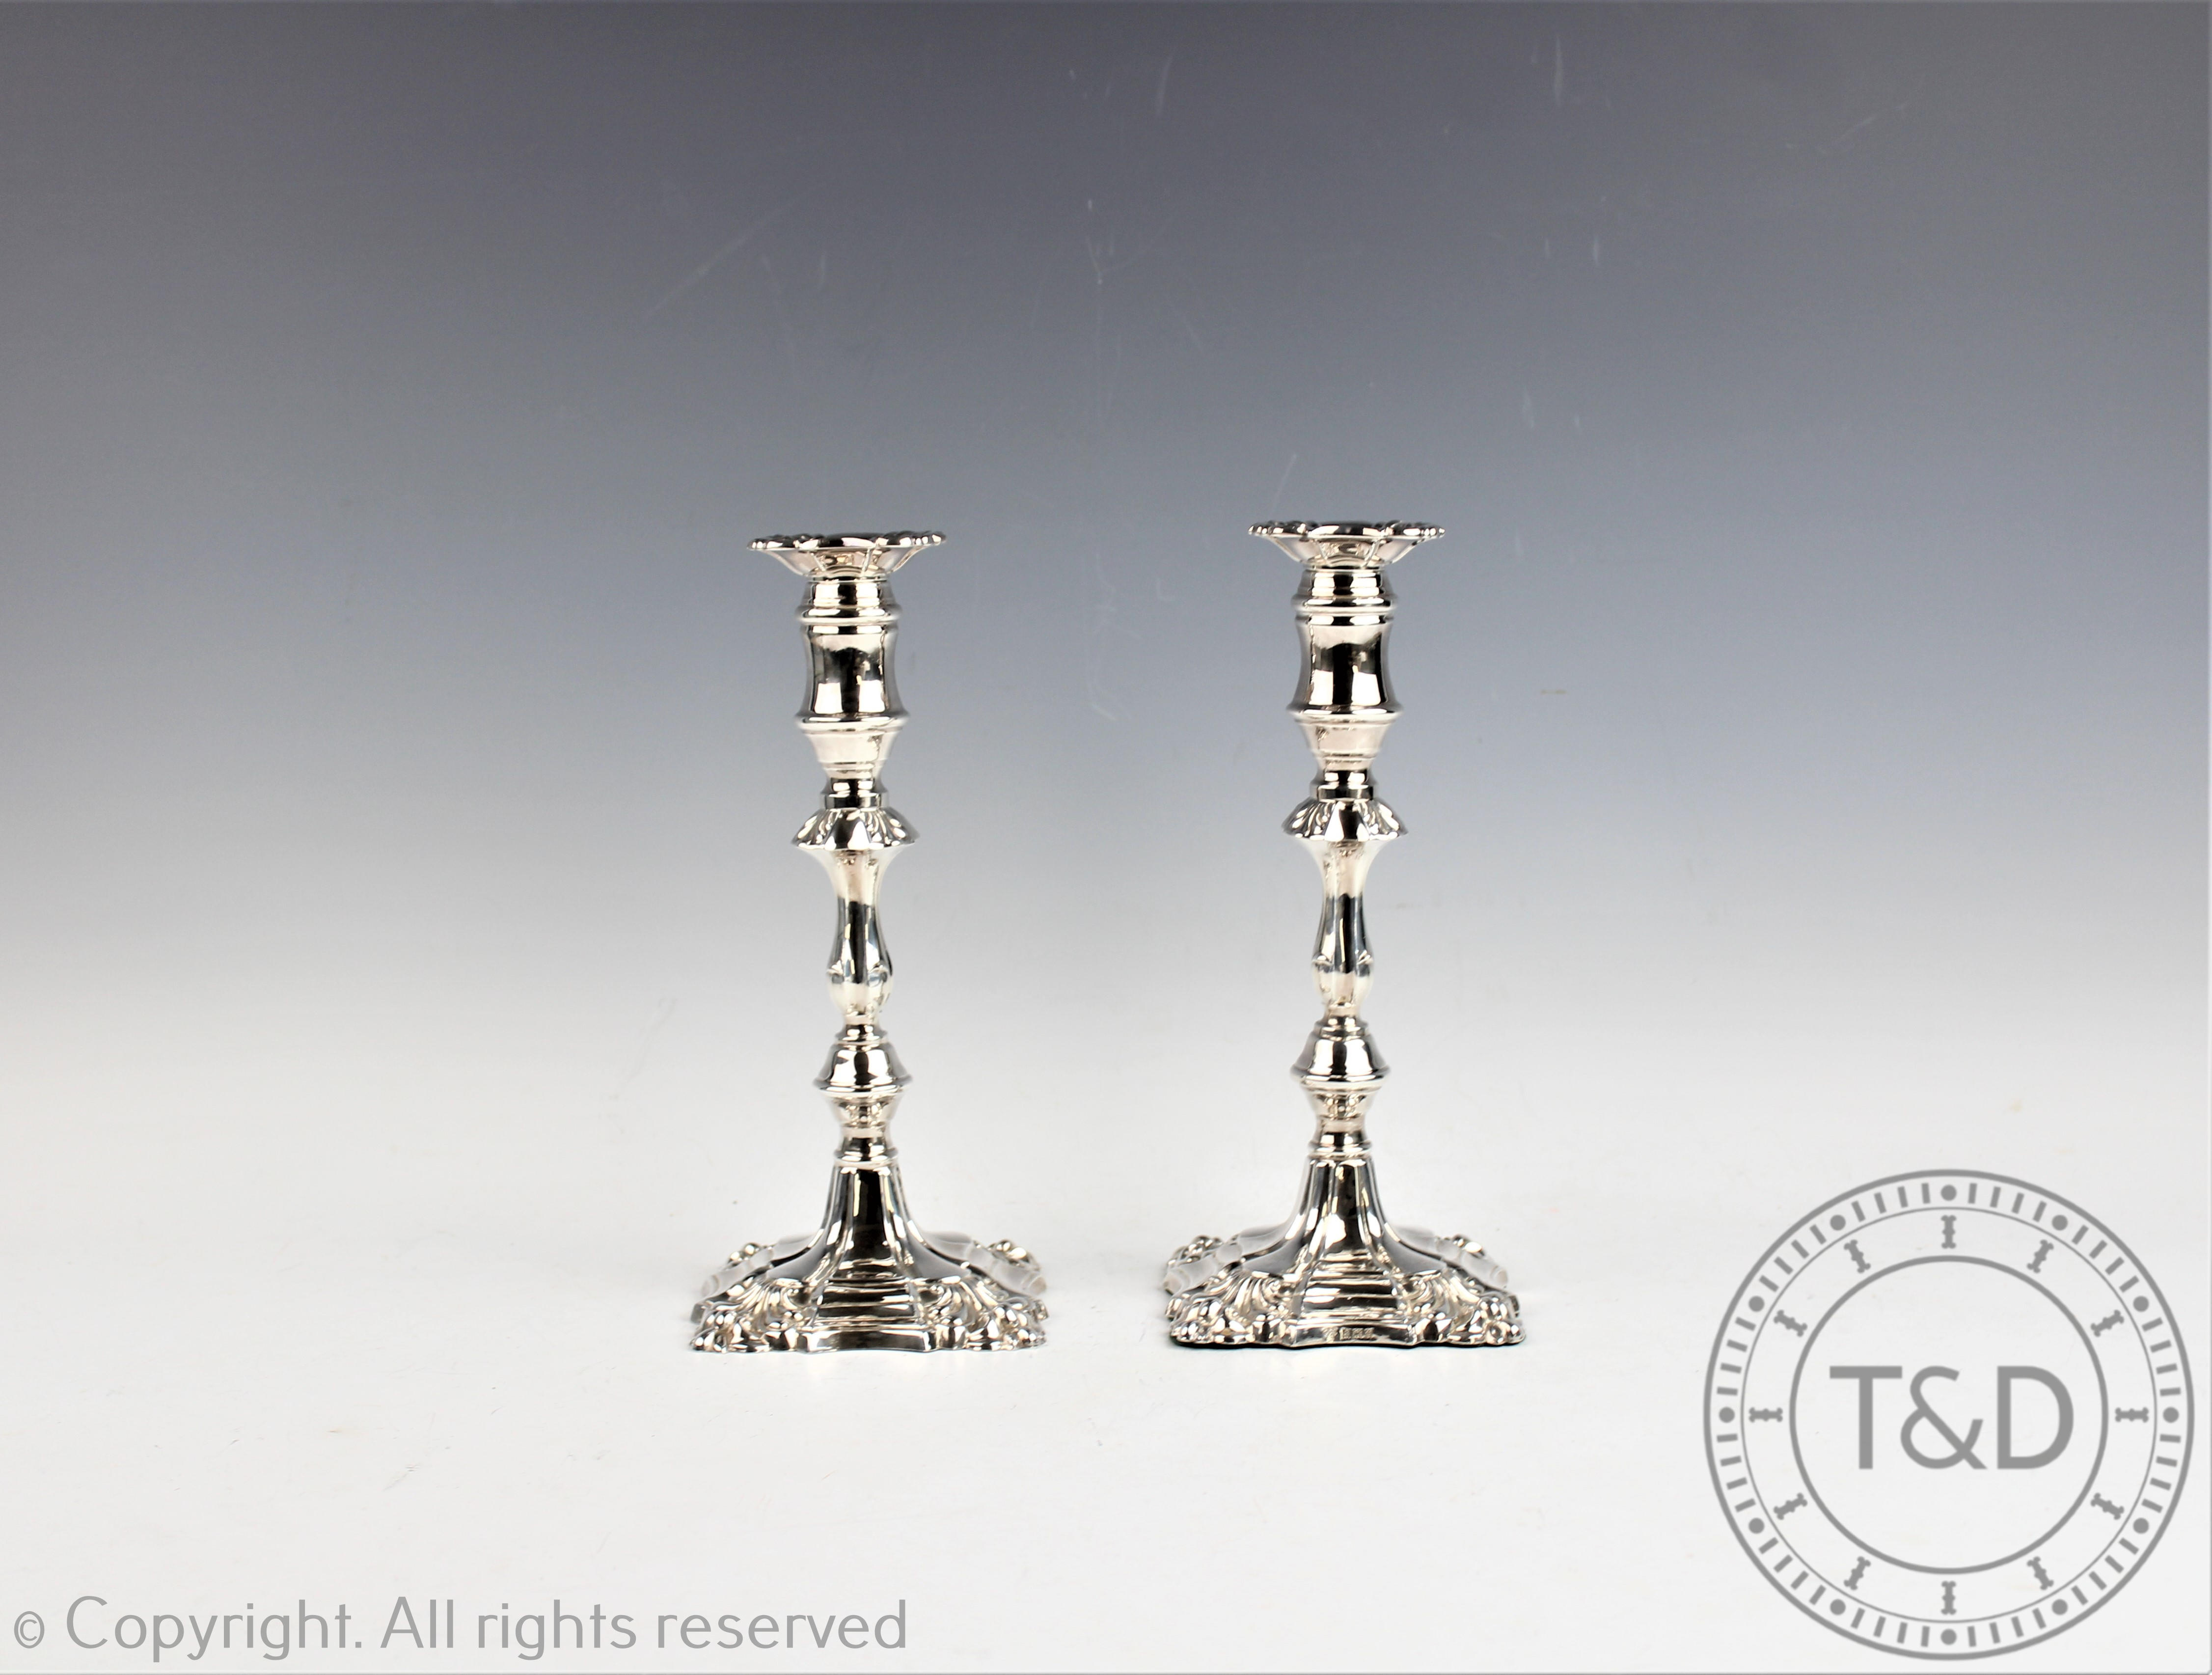 A pair of George III style silver candlesticks, C J Vander Ltd, Birmingham 1963,